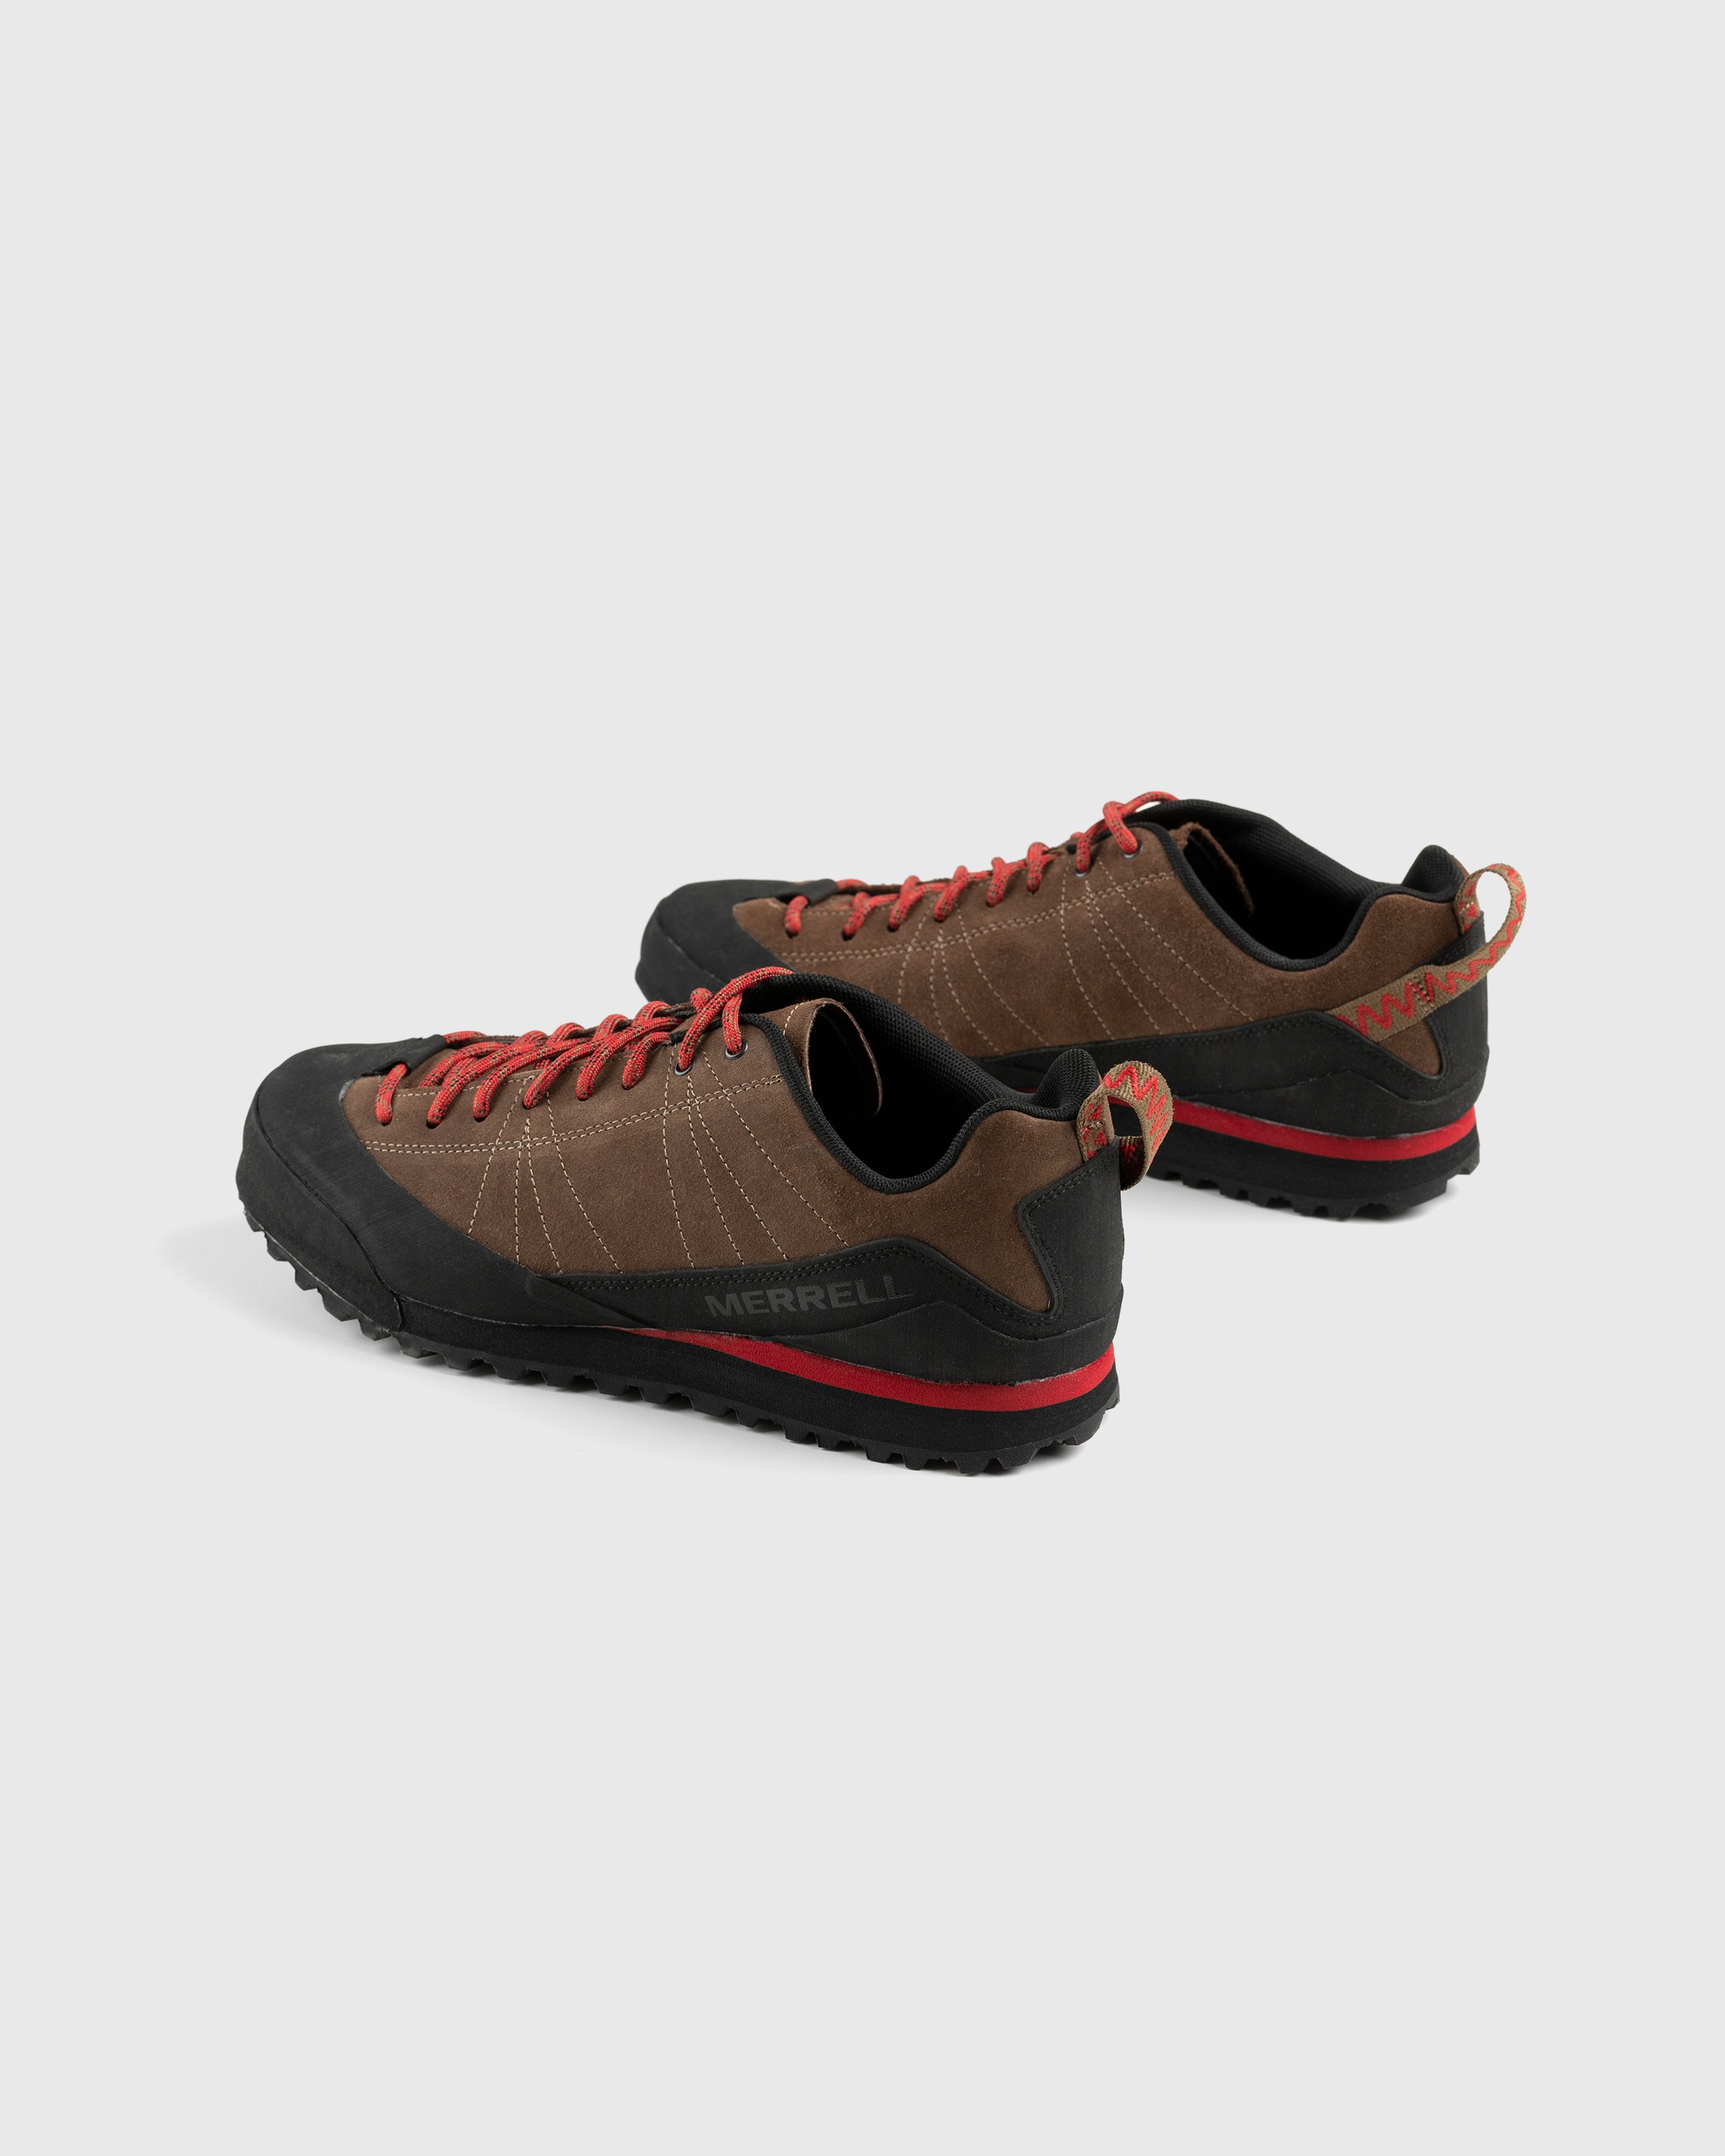 Merrell - Catalyst Pro Earth - Footwear - Brown - Image 4